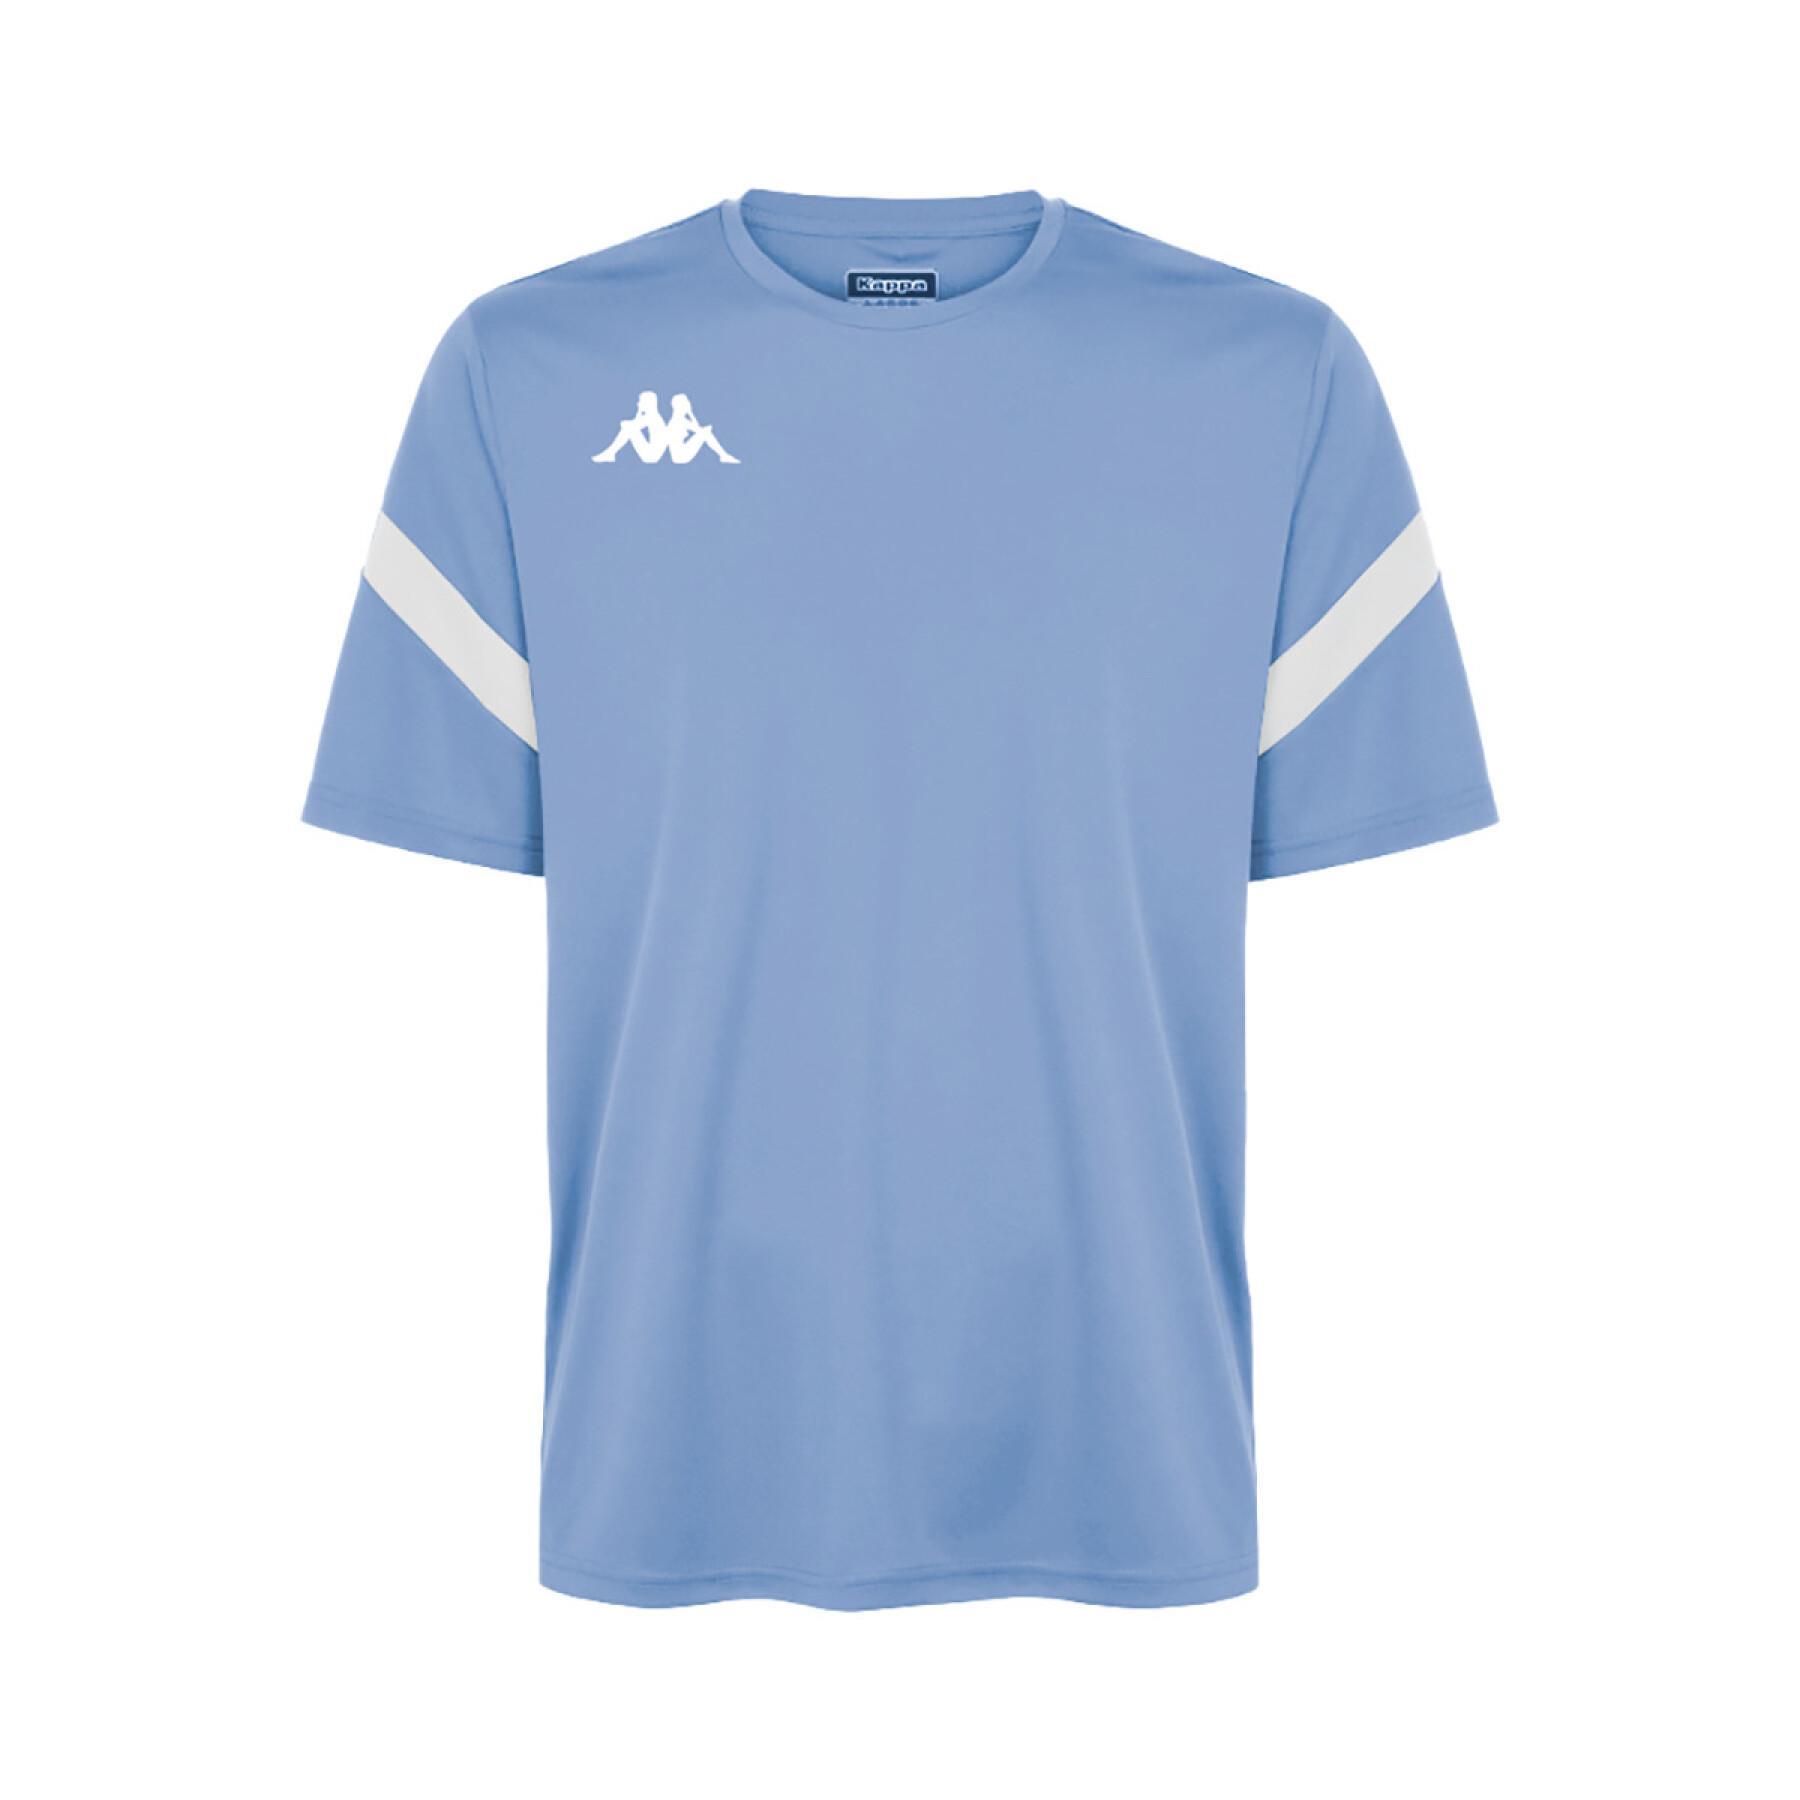 Jersey Kappa Dovo - Training shirts - Teamwear - Equipment